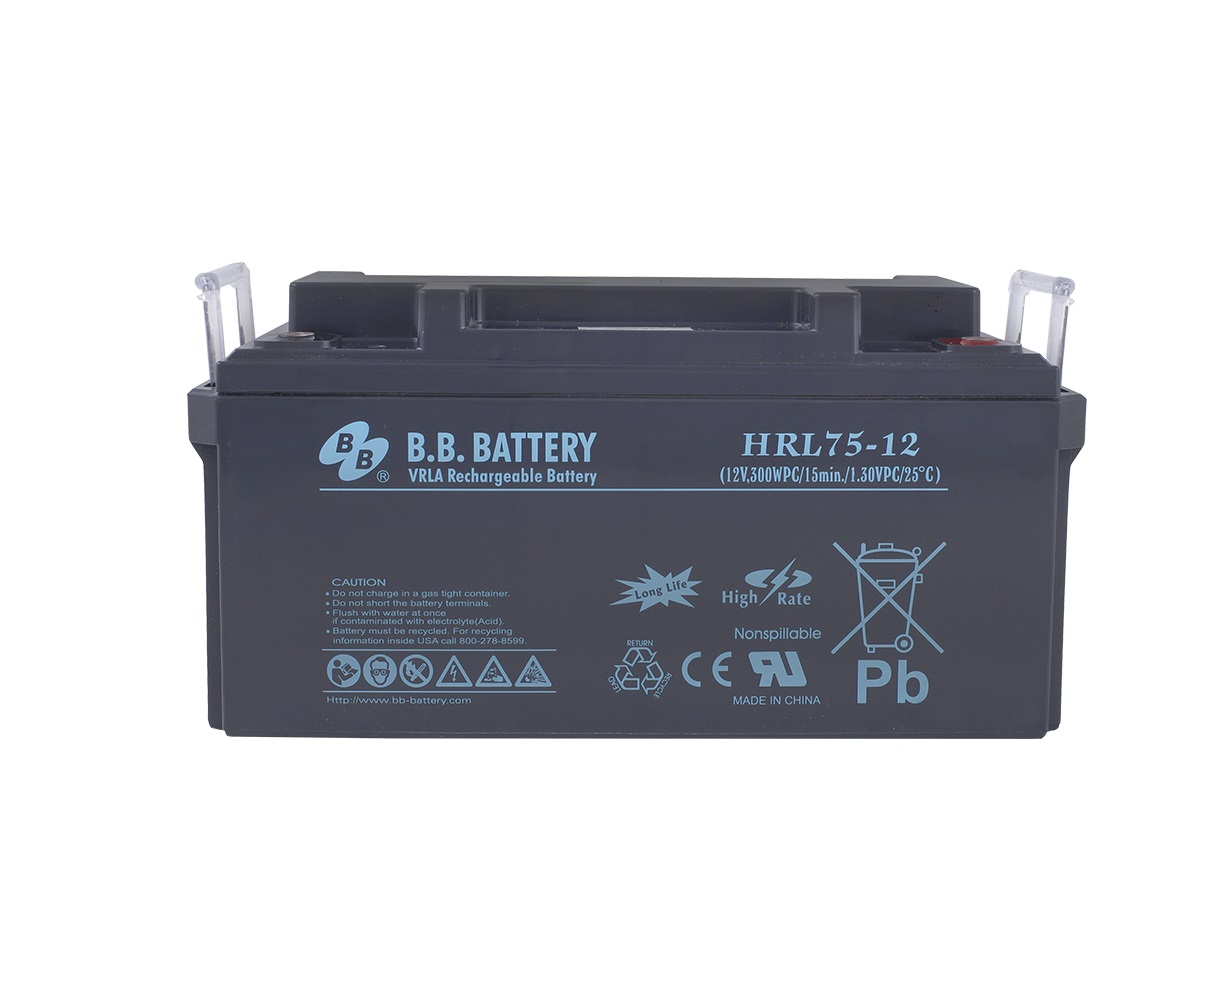 S 75 12. BB Battery hrl9-12 этикетка. Батарея для ИБП B. B. Battery HR 22-12. B.B Battery 12-75.